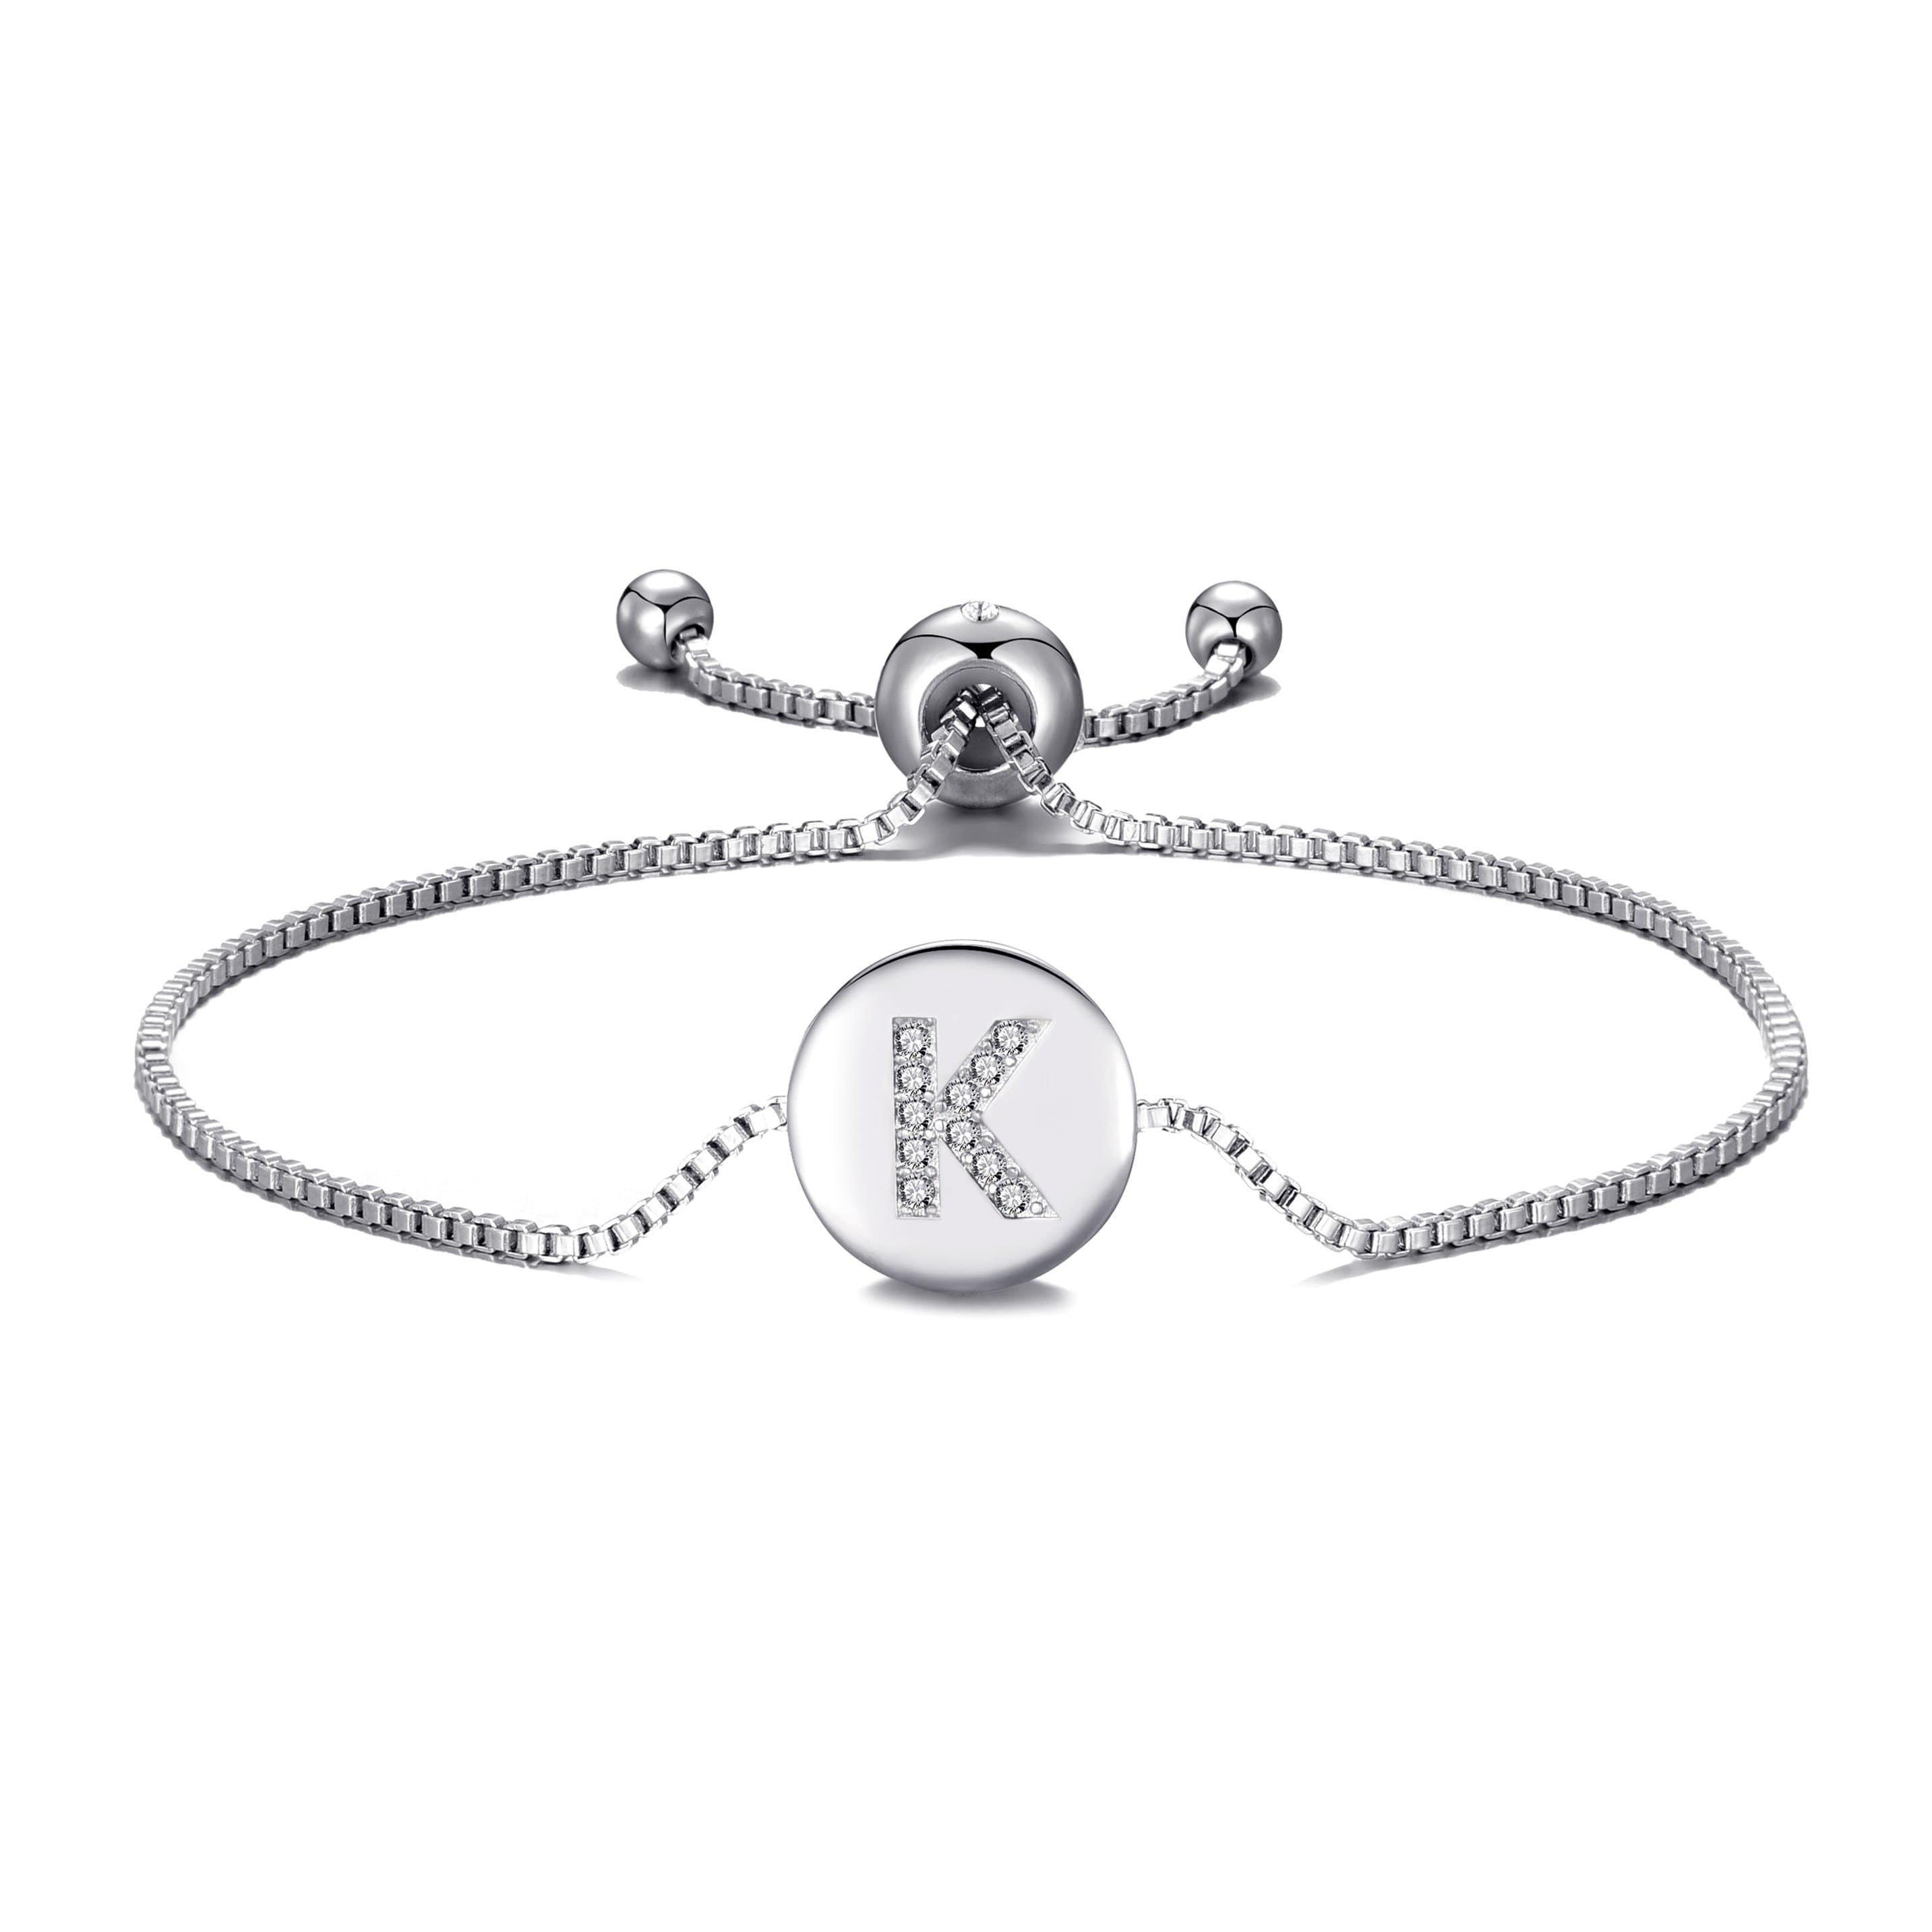 Initial Friendship Bracelet Letter K Created with Zircondia® Crystals by Philip Jones Jewellery